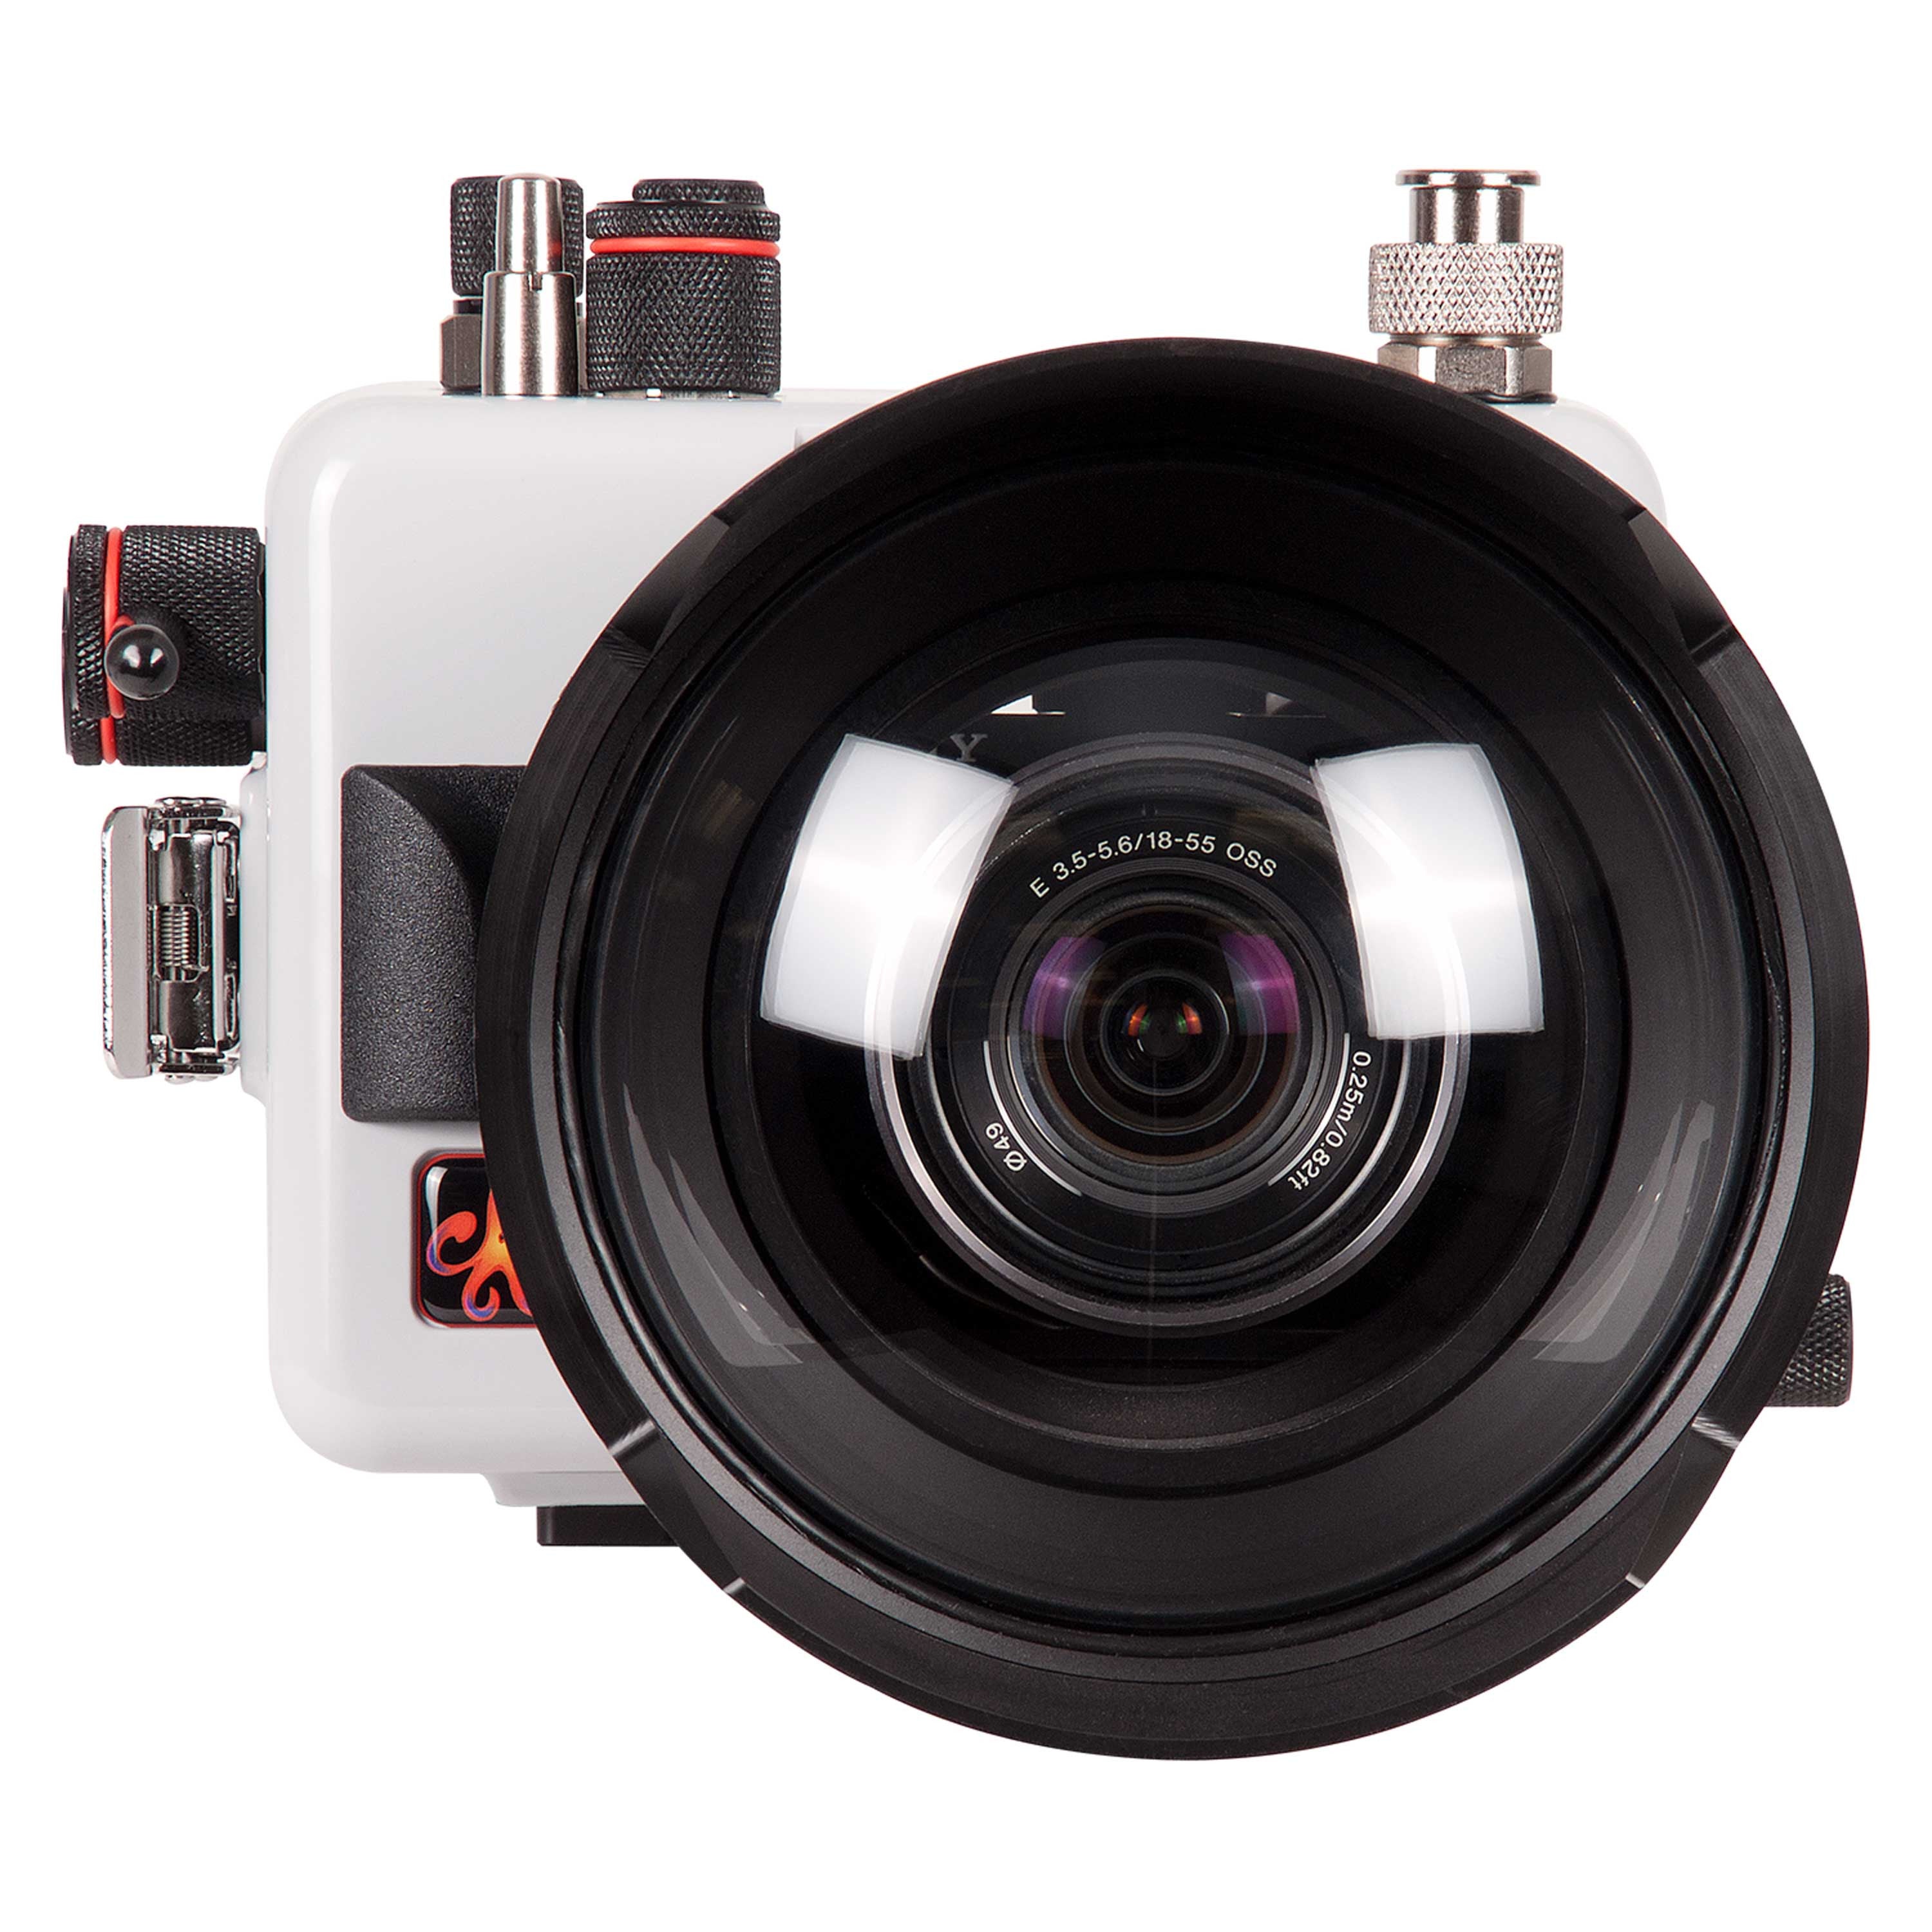 200DLM/A Underwater TTL Housing for Sony Alpha A6000 Mirrorless Camera